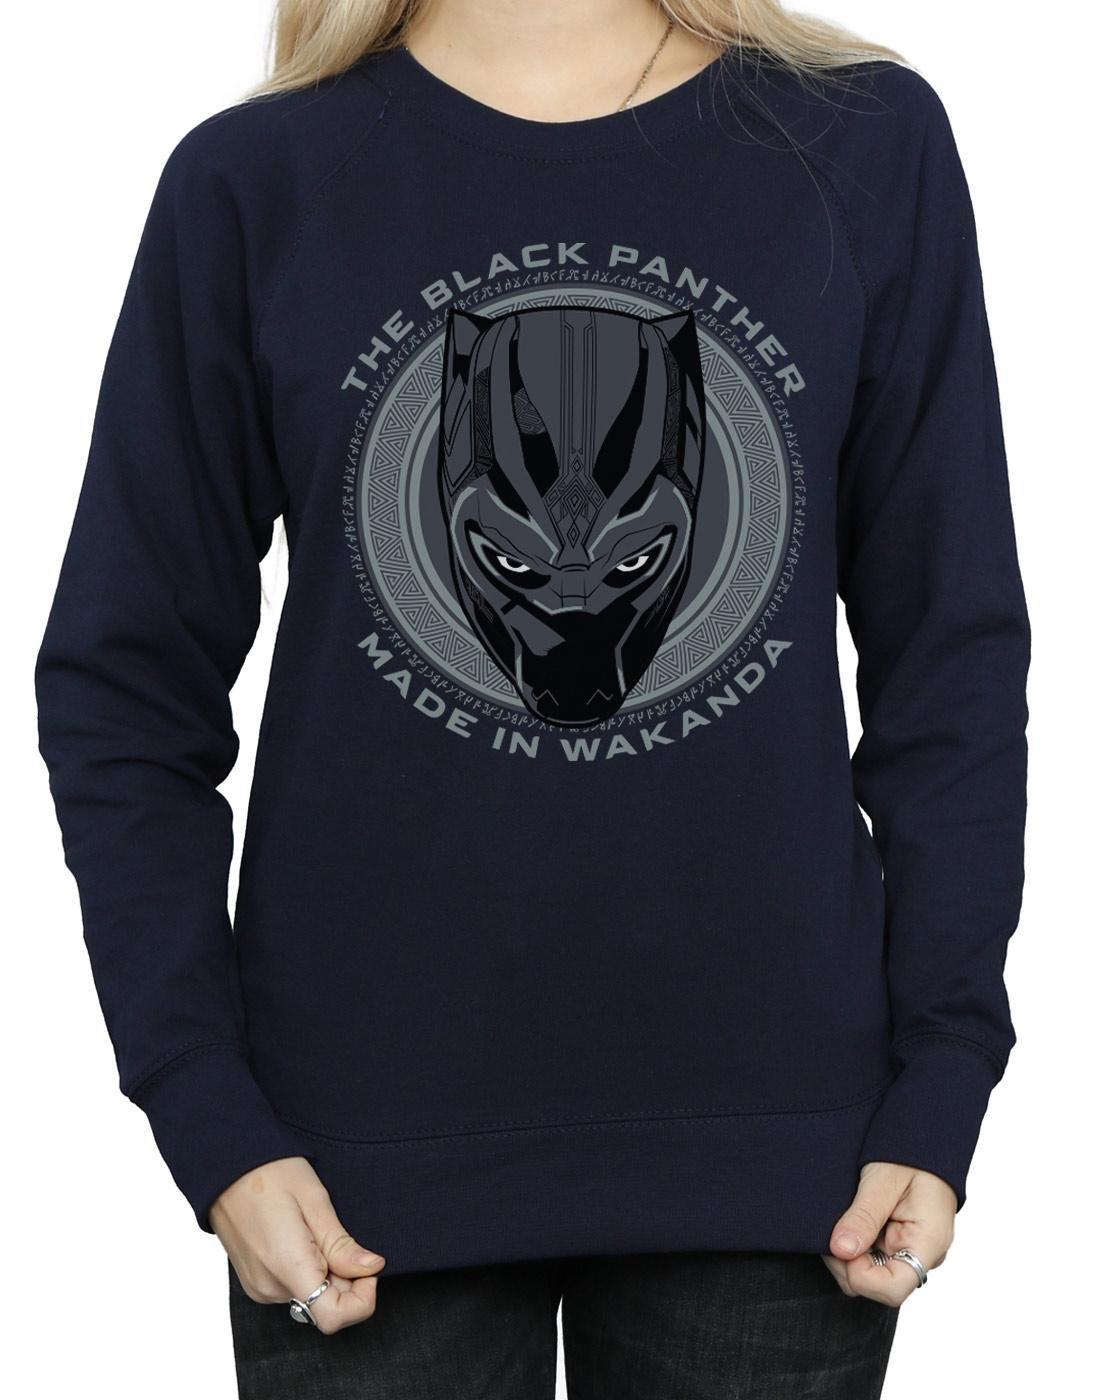 Black Panther  Made In Wakanda Sweatshirt 